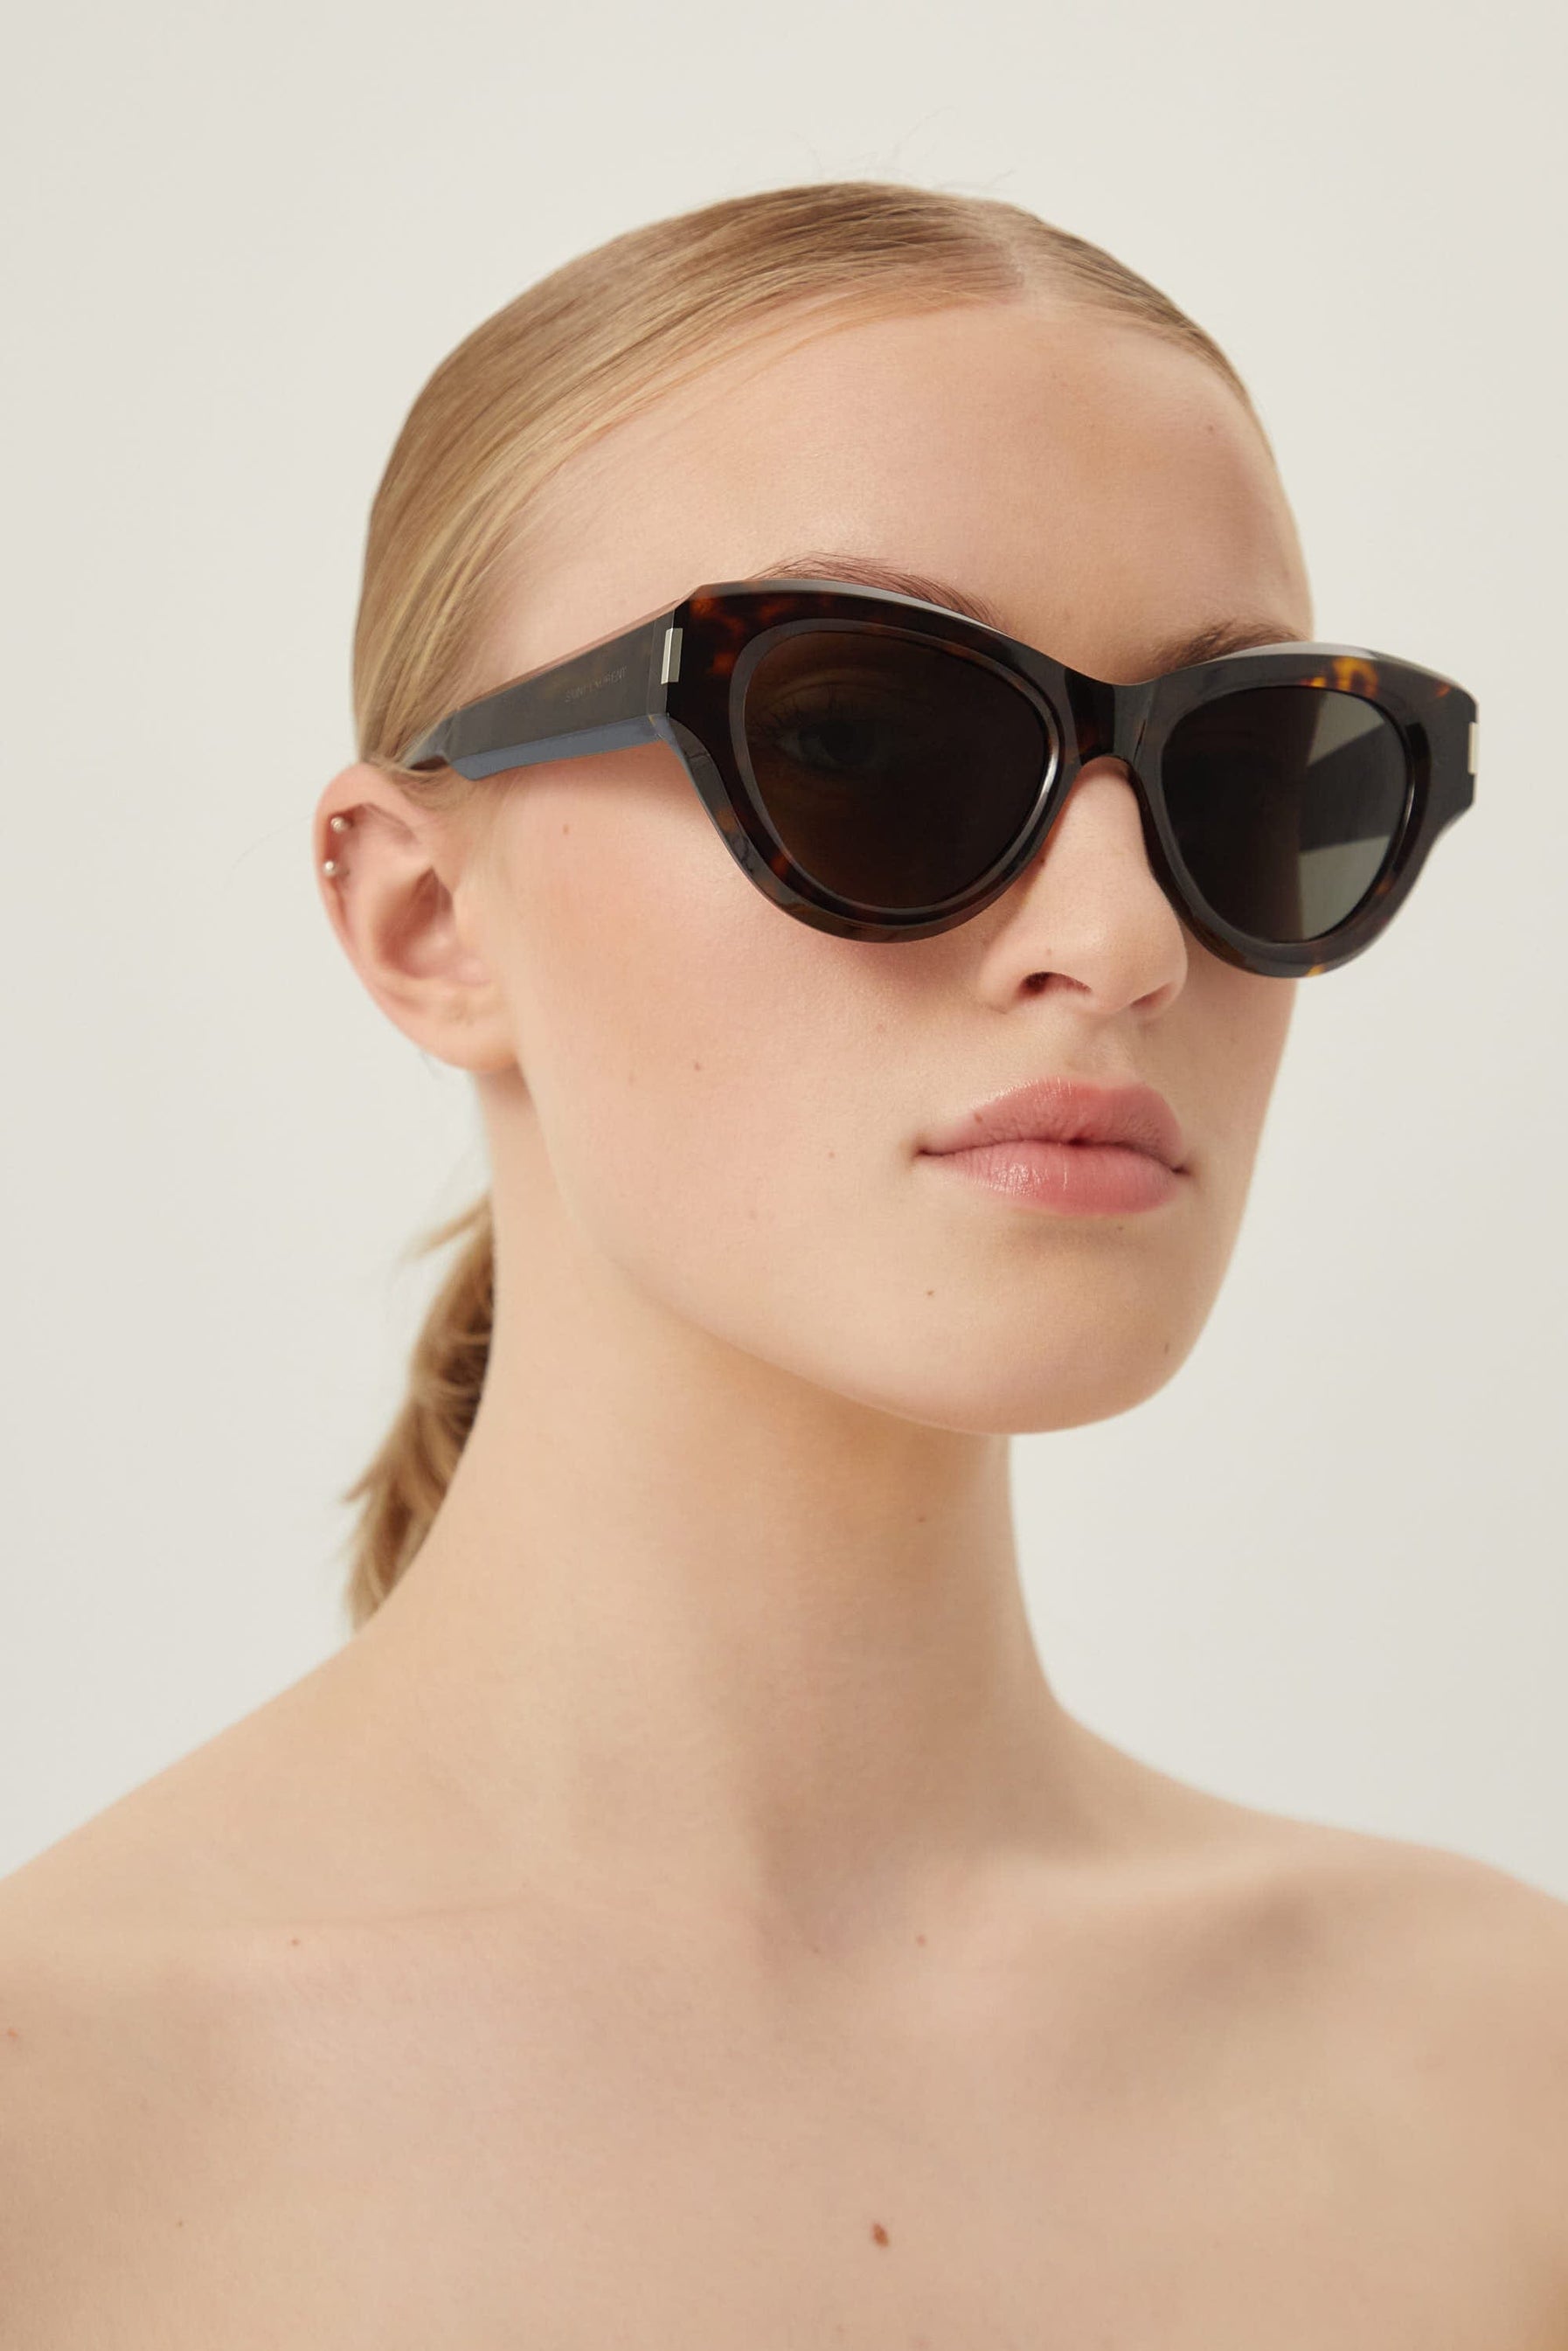 Saint Laurent super-bold cat-eye sunglasses - Eyewear Club